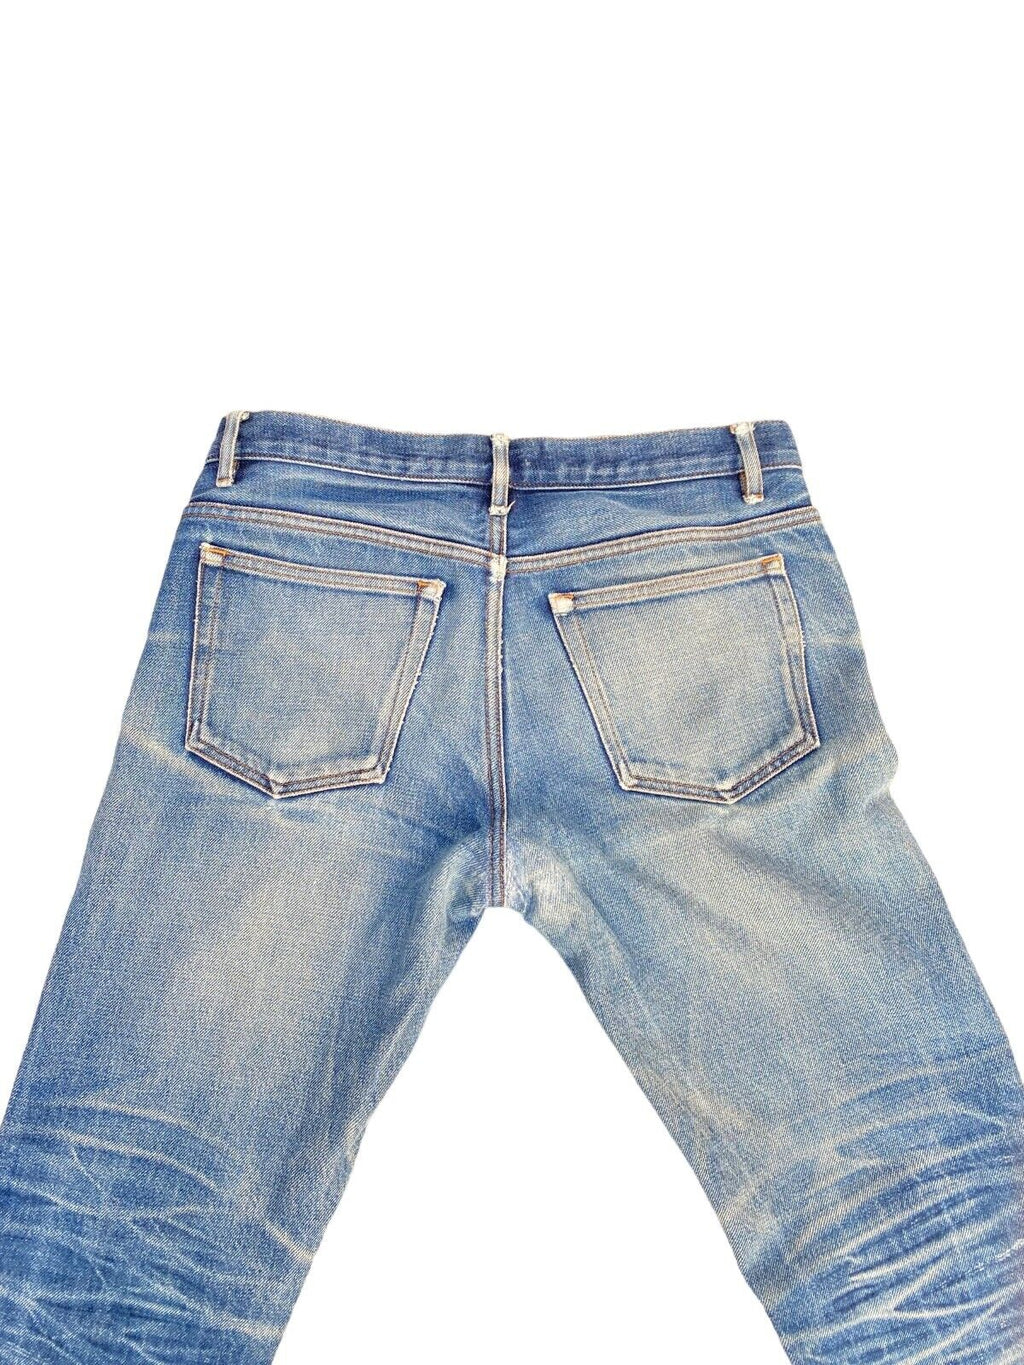 A.P.C.   Butler denim jeans Petit Standard  Size 28 Unisex   APC Butler